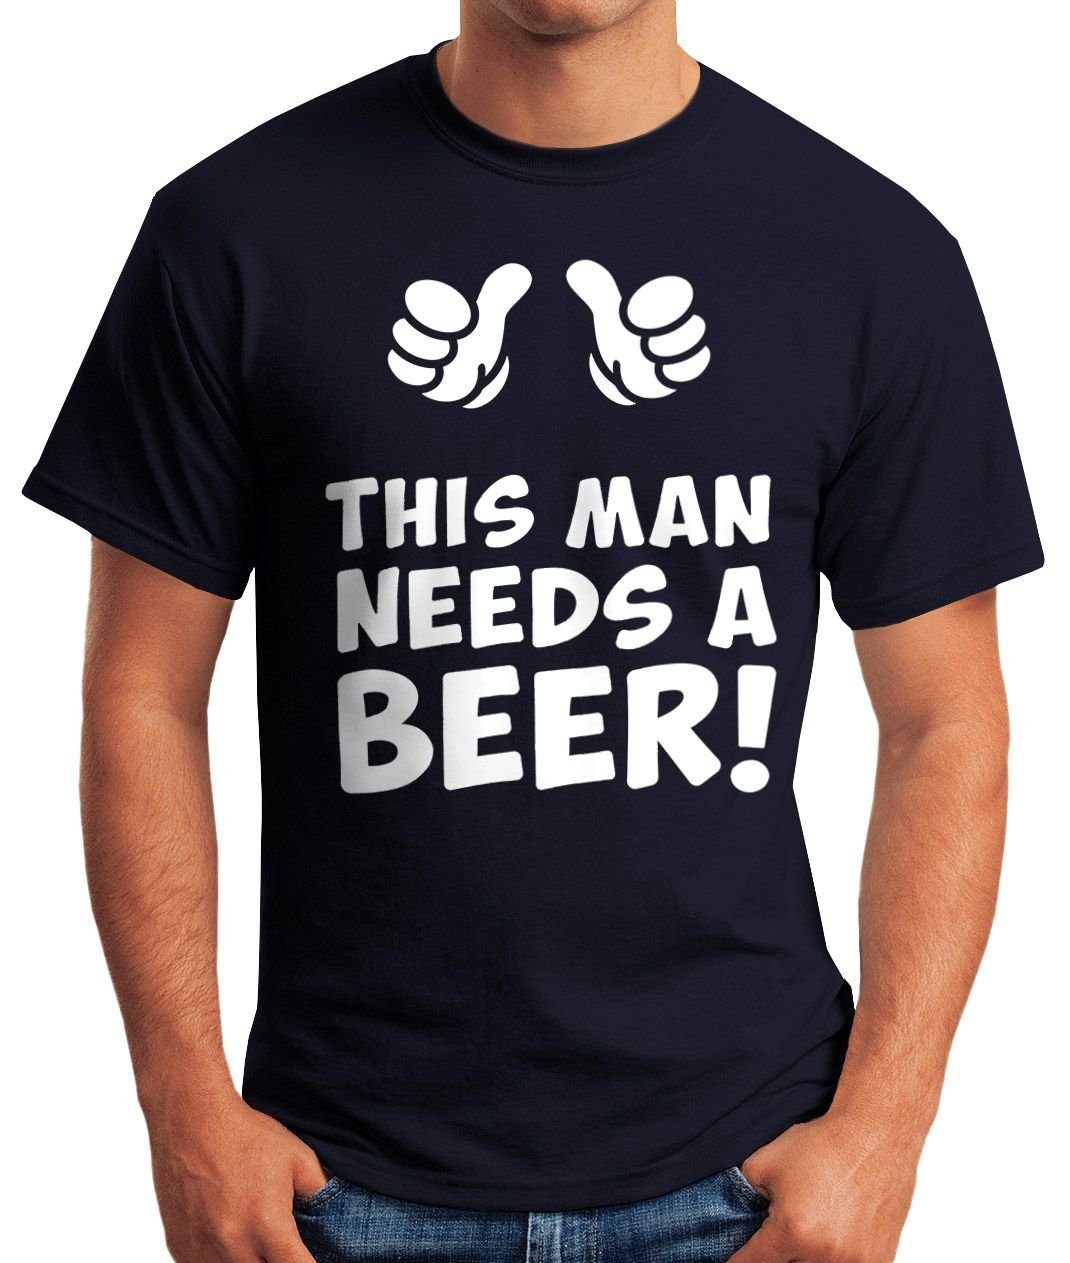 Print-Shirt Bier Herren T-Shirt man Moonworks® mit MoonWorks needs Print a This navy beer